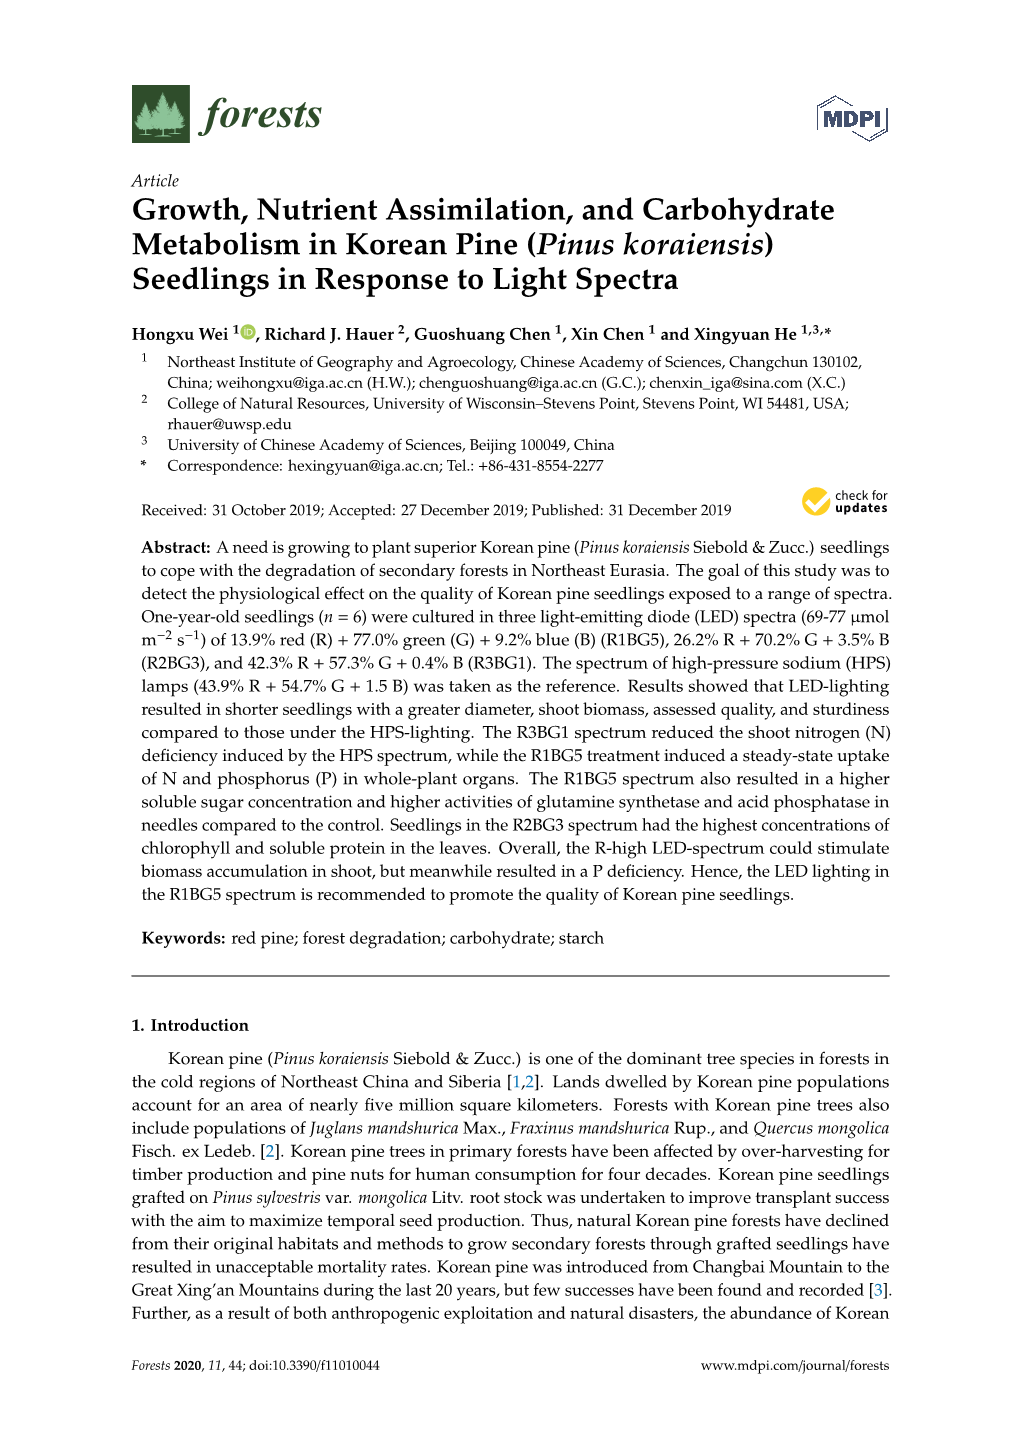 Growth, Nutrient Assimilation, and Carbohydrate Metabolism in Korean Pine (Pinus Koraiensis) Seedlings in Response to Light Spectra